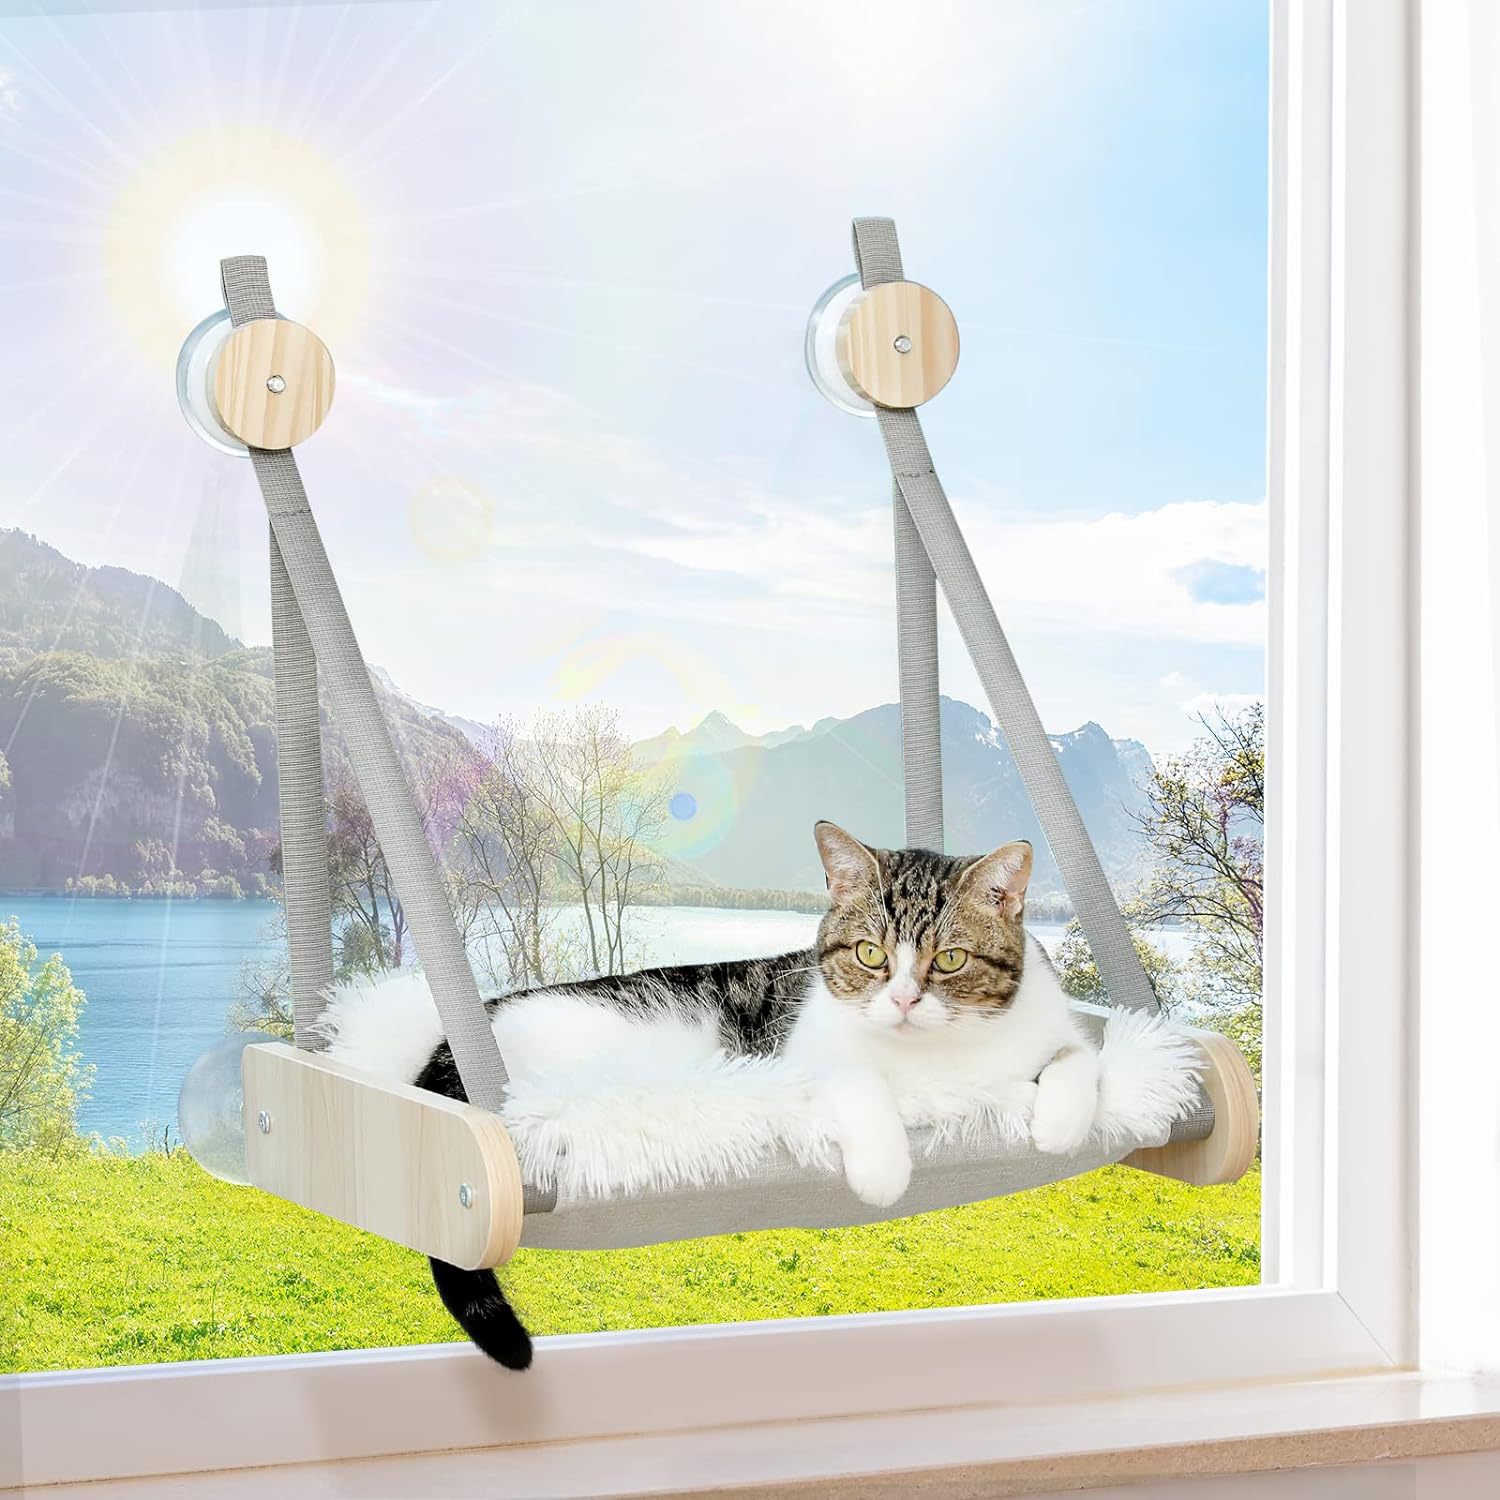 PEQULTI Cat Window Perch, Cat Window Hammock with Screwed Sustion Cups